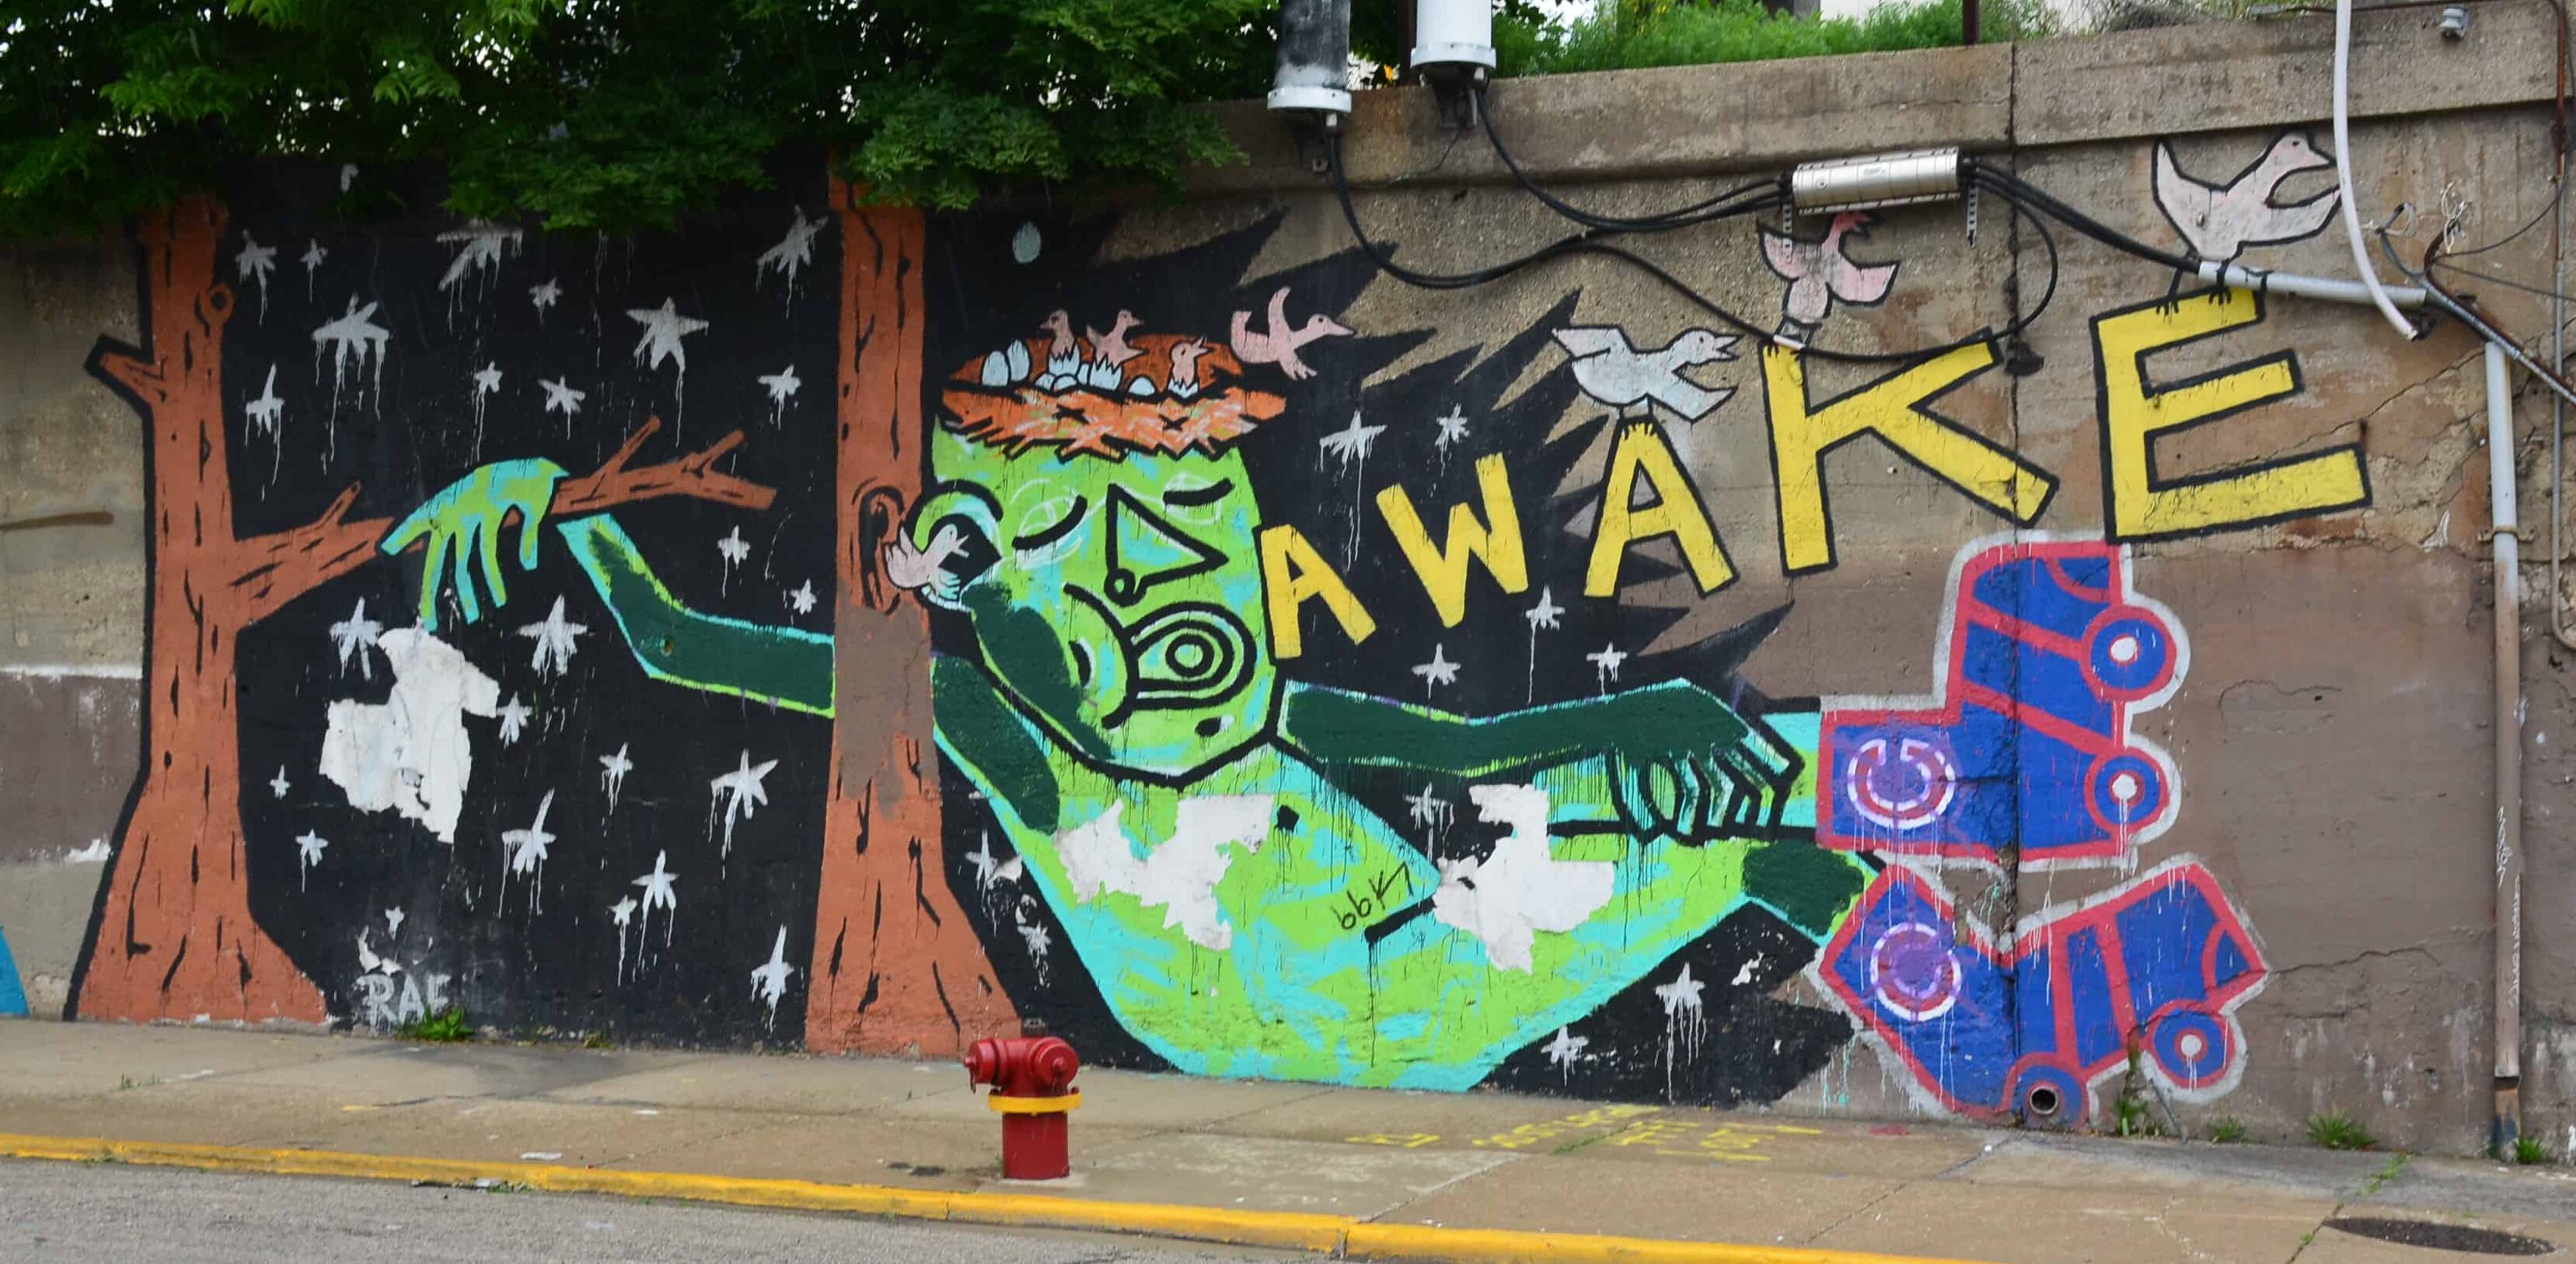 Awake mural between Ashland and Paulina in Pilsen, Chicago, Illinois